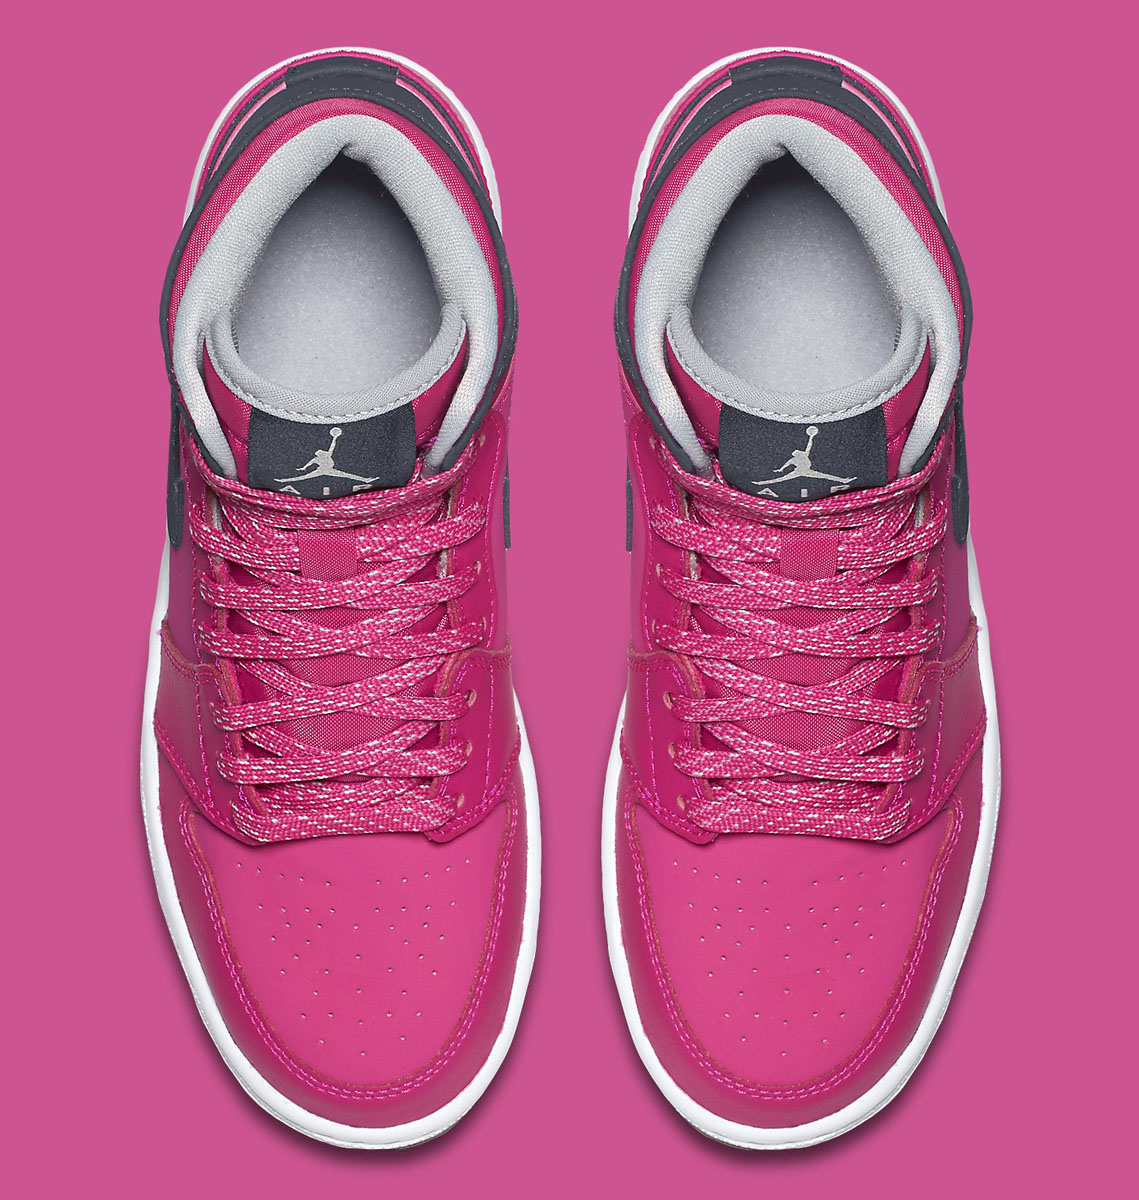 Air Jordan 1 High Girls Pink/Black (5)